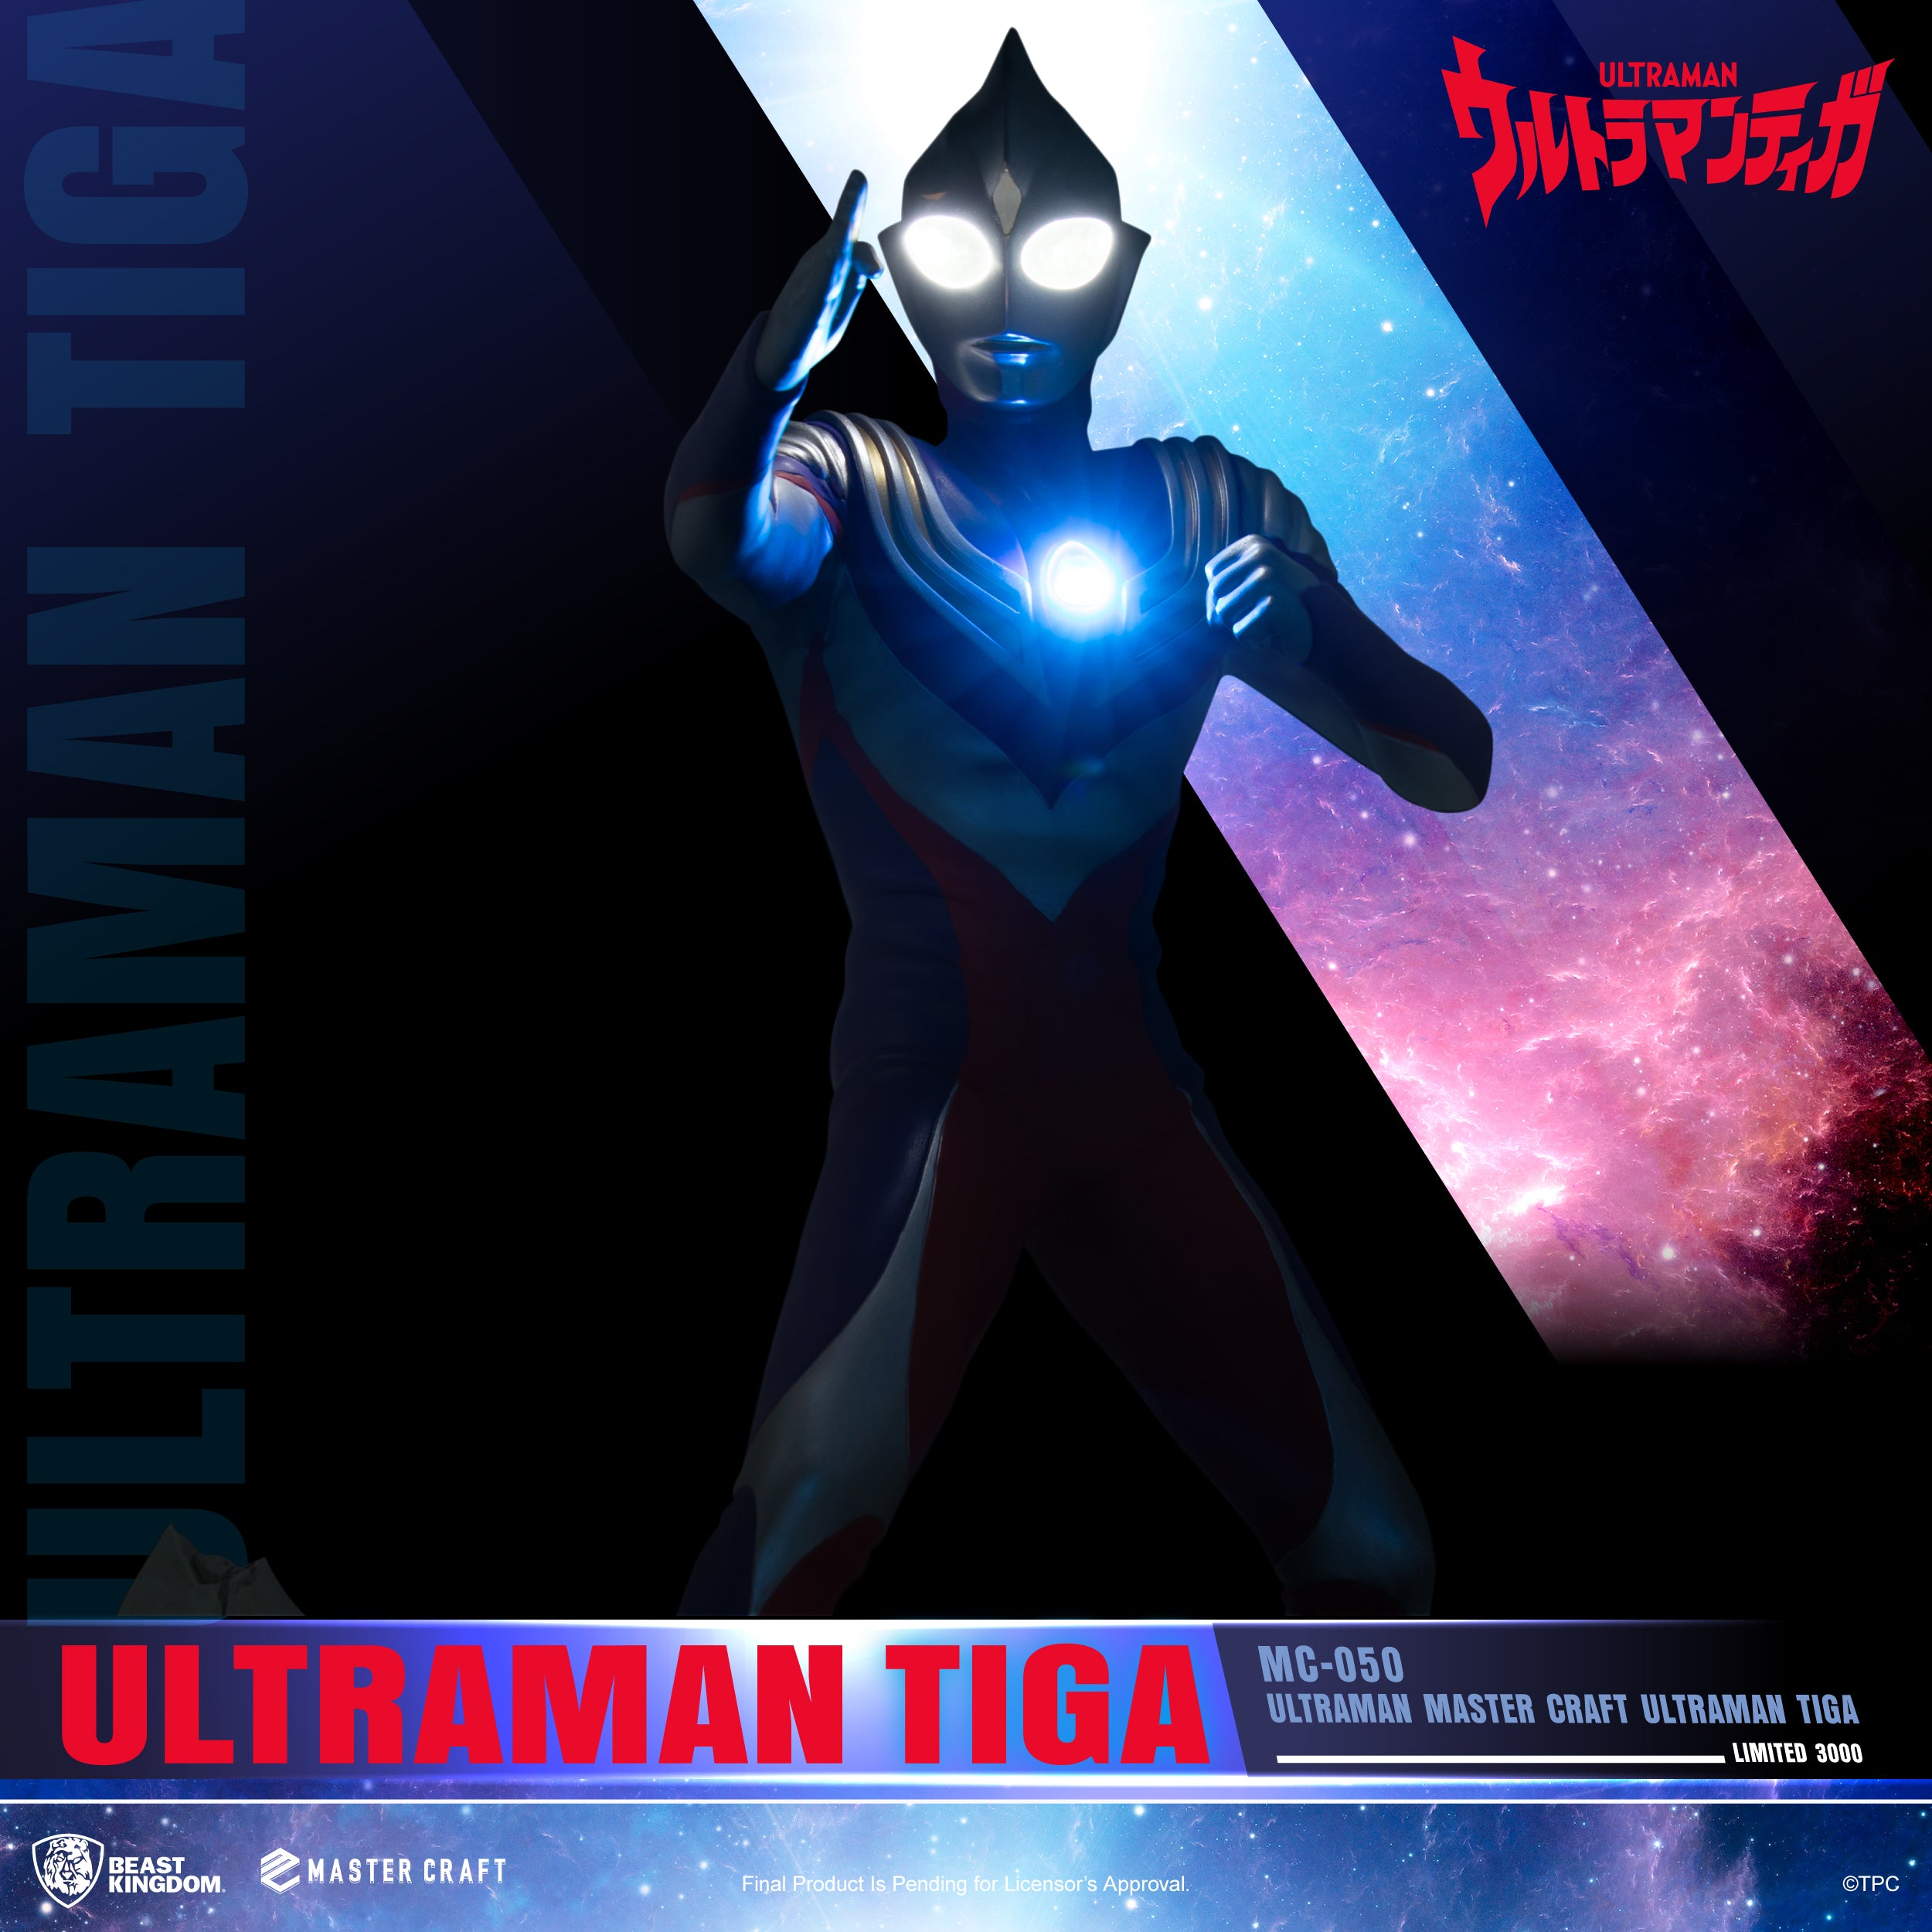 Beast Kingdom MC-050 Ultraman Master Craft Ultraman Tiga 1:4 Scale Master Craft Figure Statue